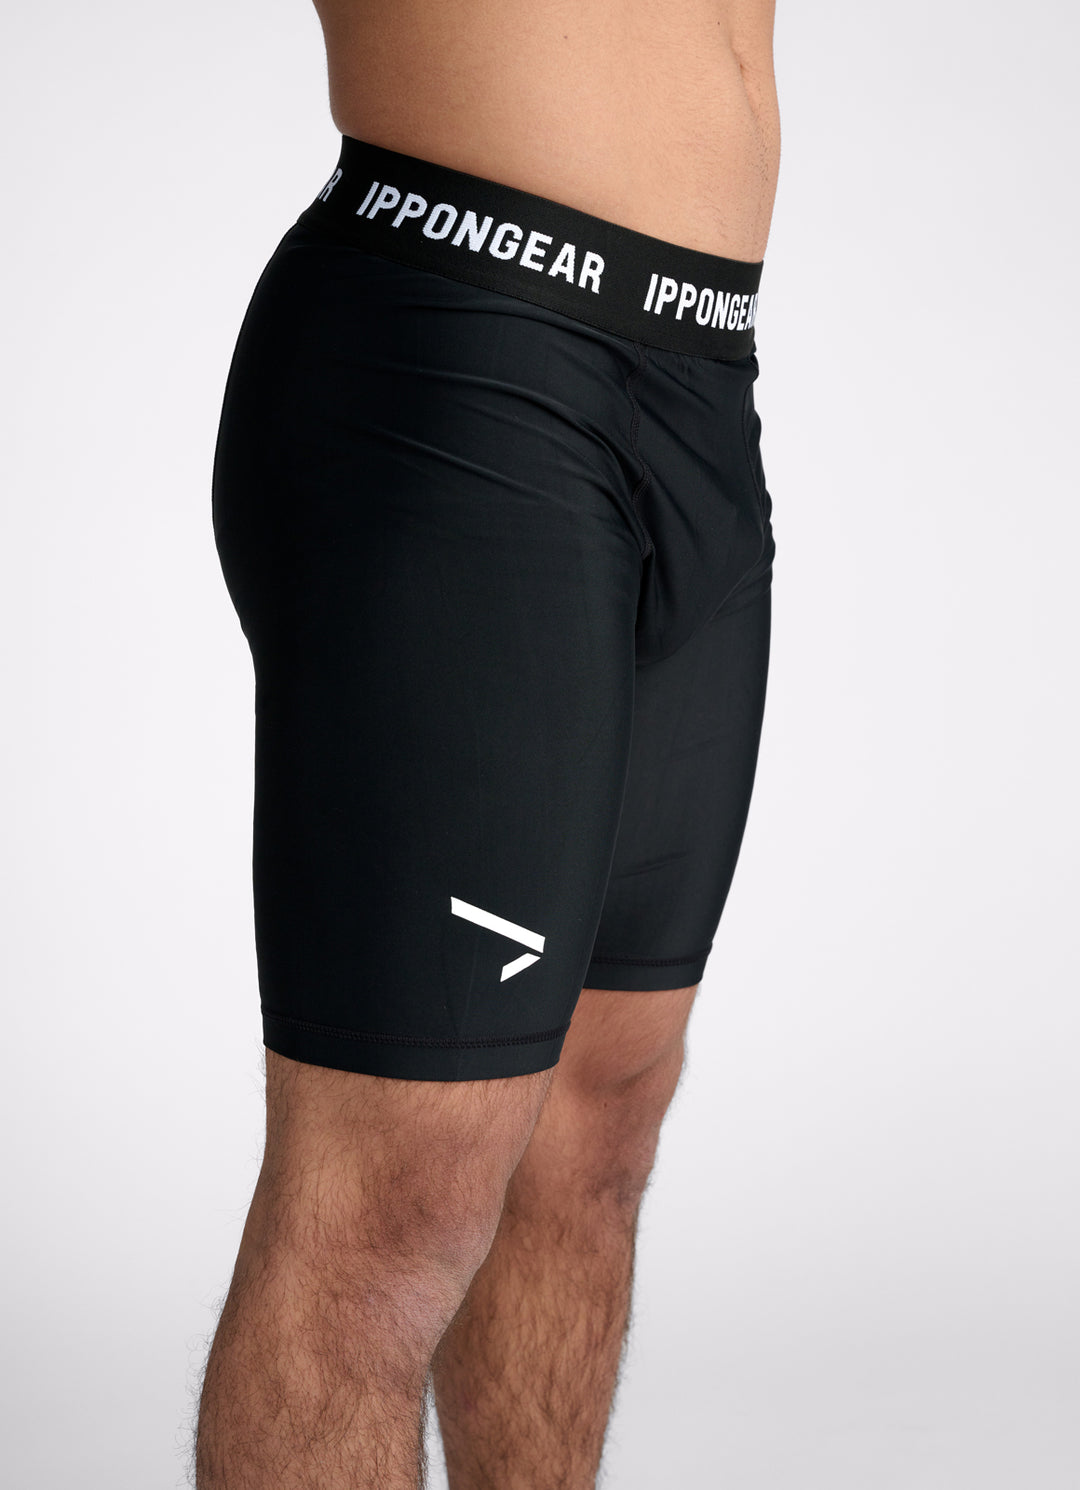 IPPONGEAR Essential Vale Tudo Shorts